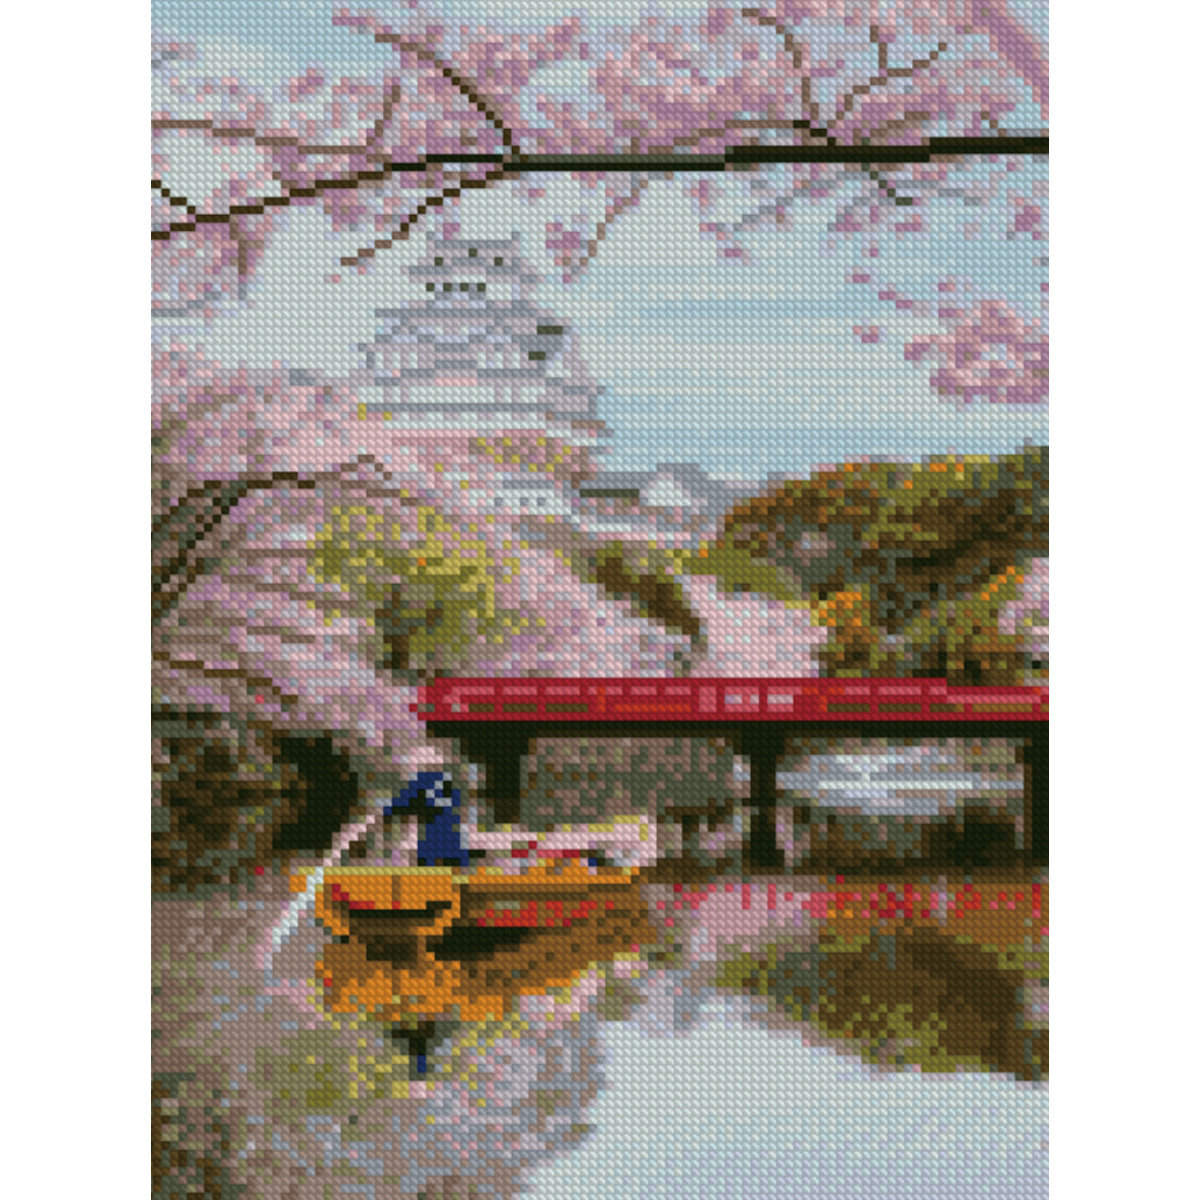 Diamond painting HX277 "Sakura on the water", size 30x40 cm